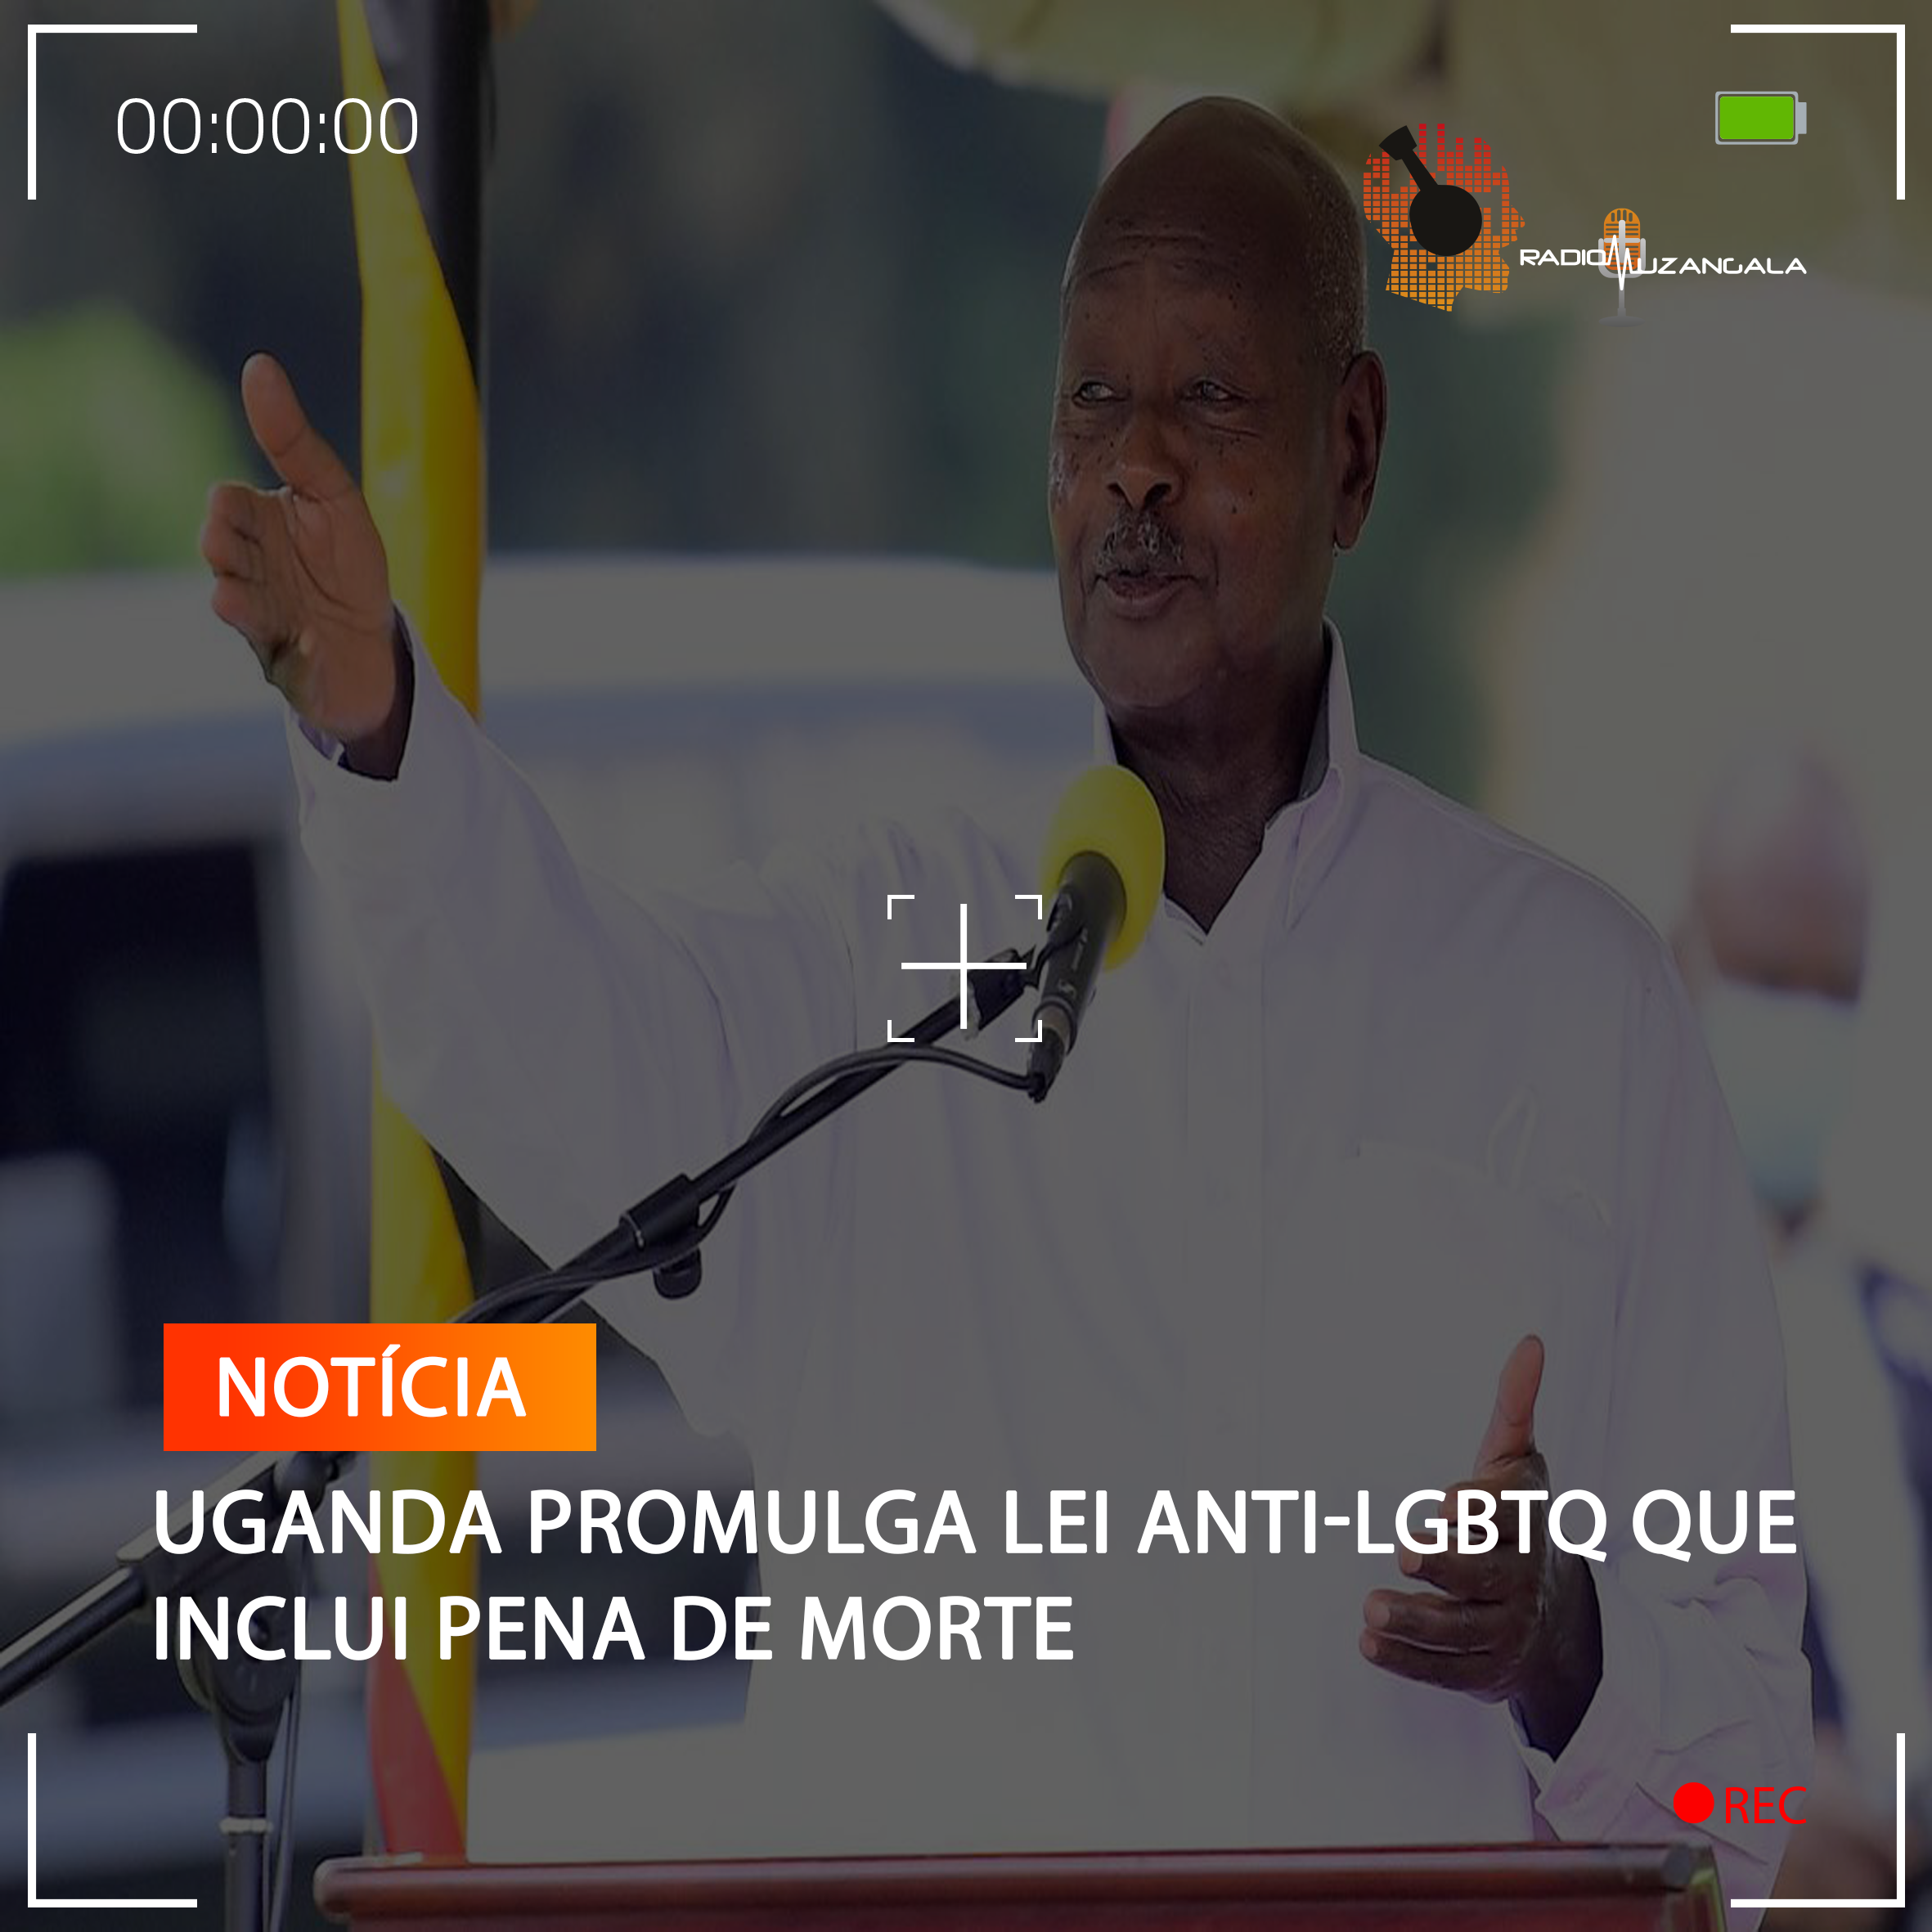  UGANDA PROMULGA LEI ANTI-LGBTQ QUE INCLUI PENA DE MORTE